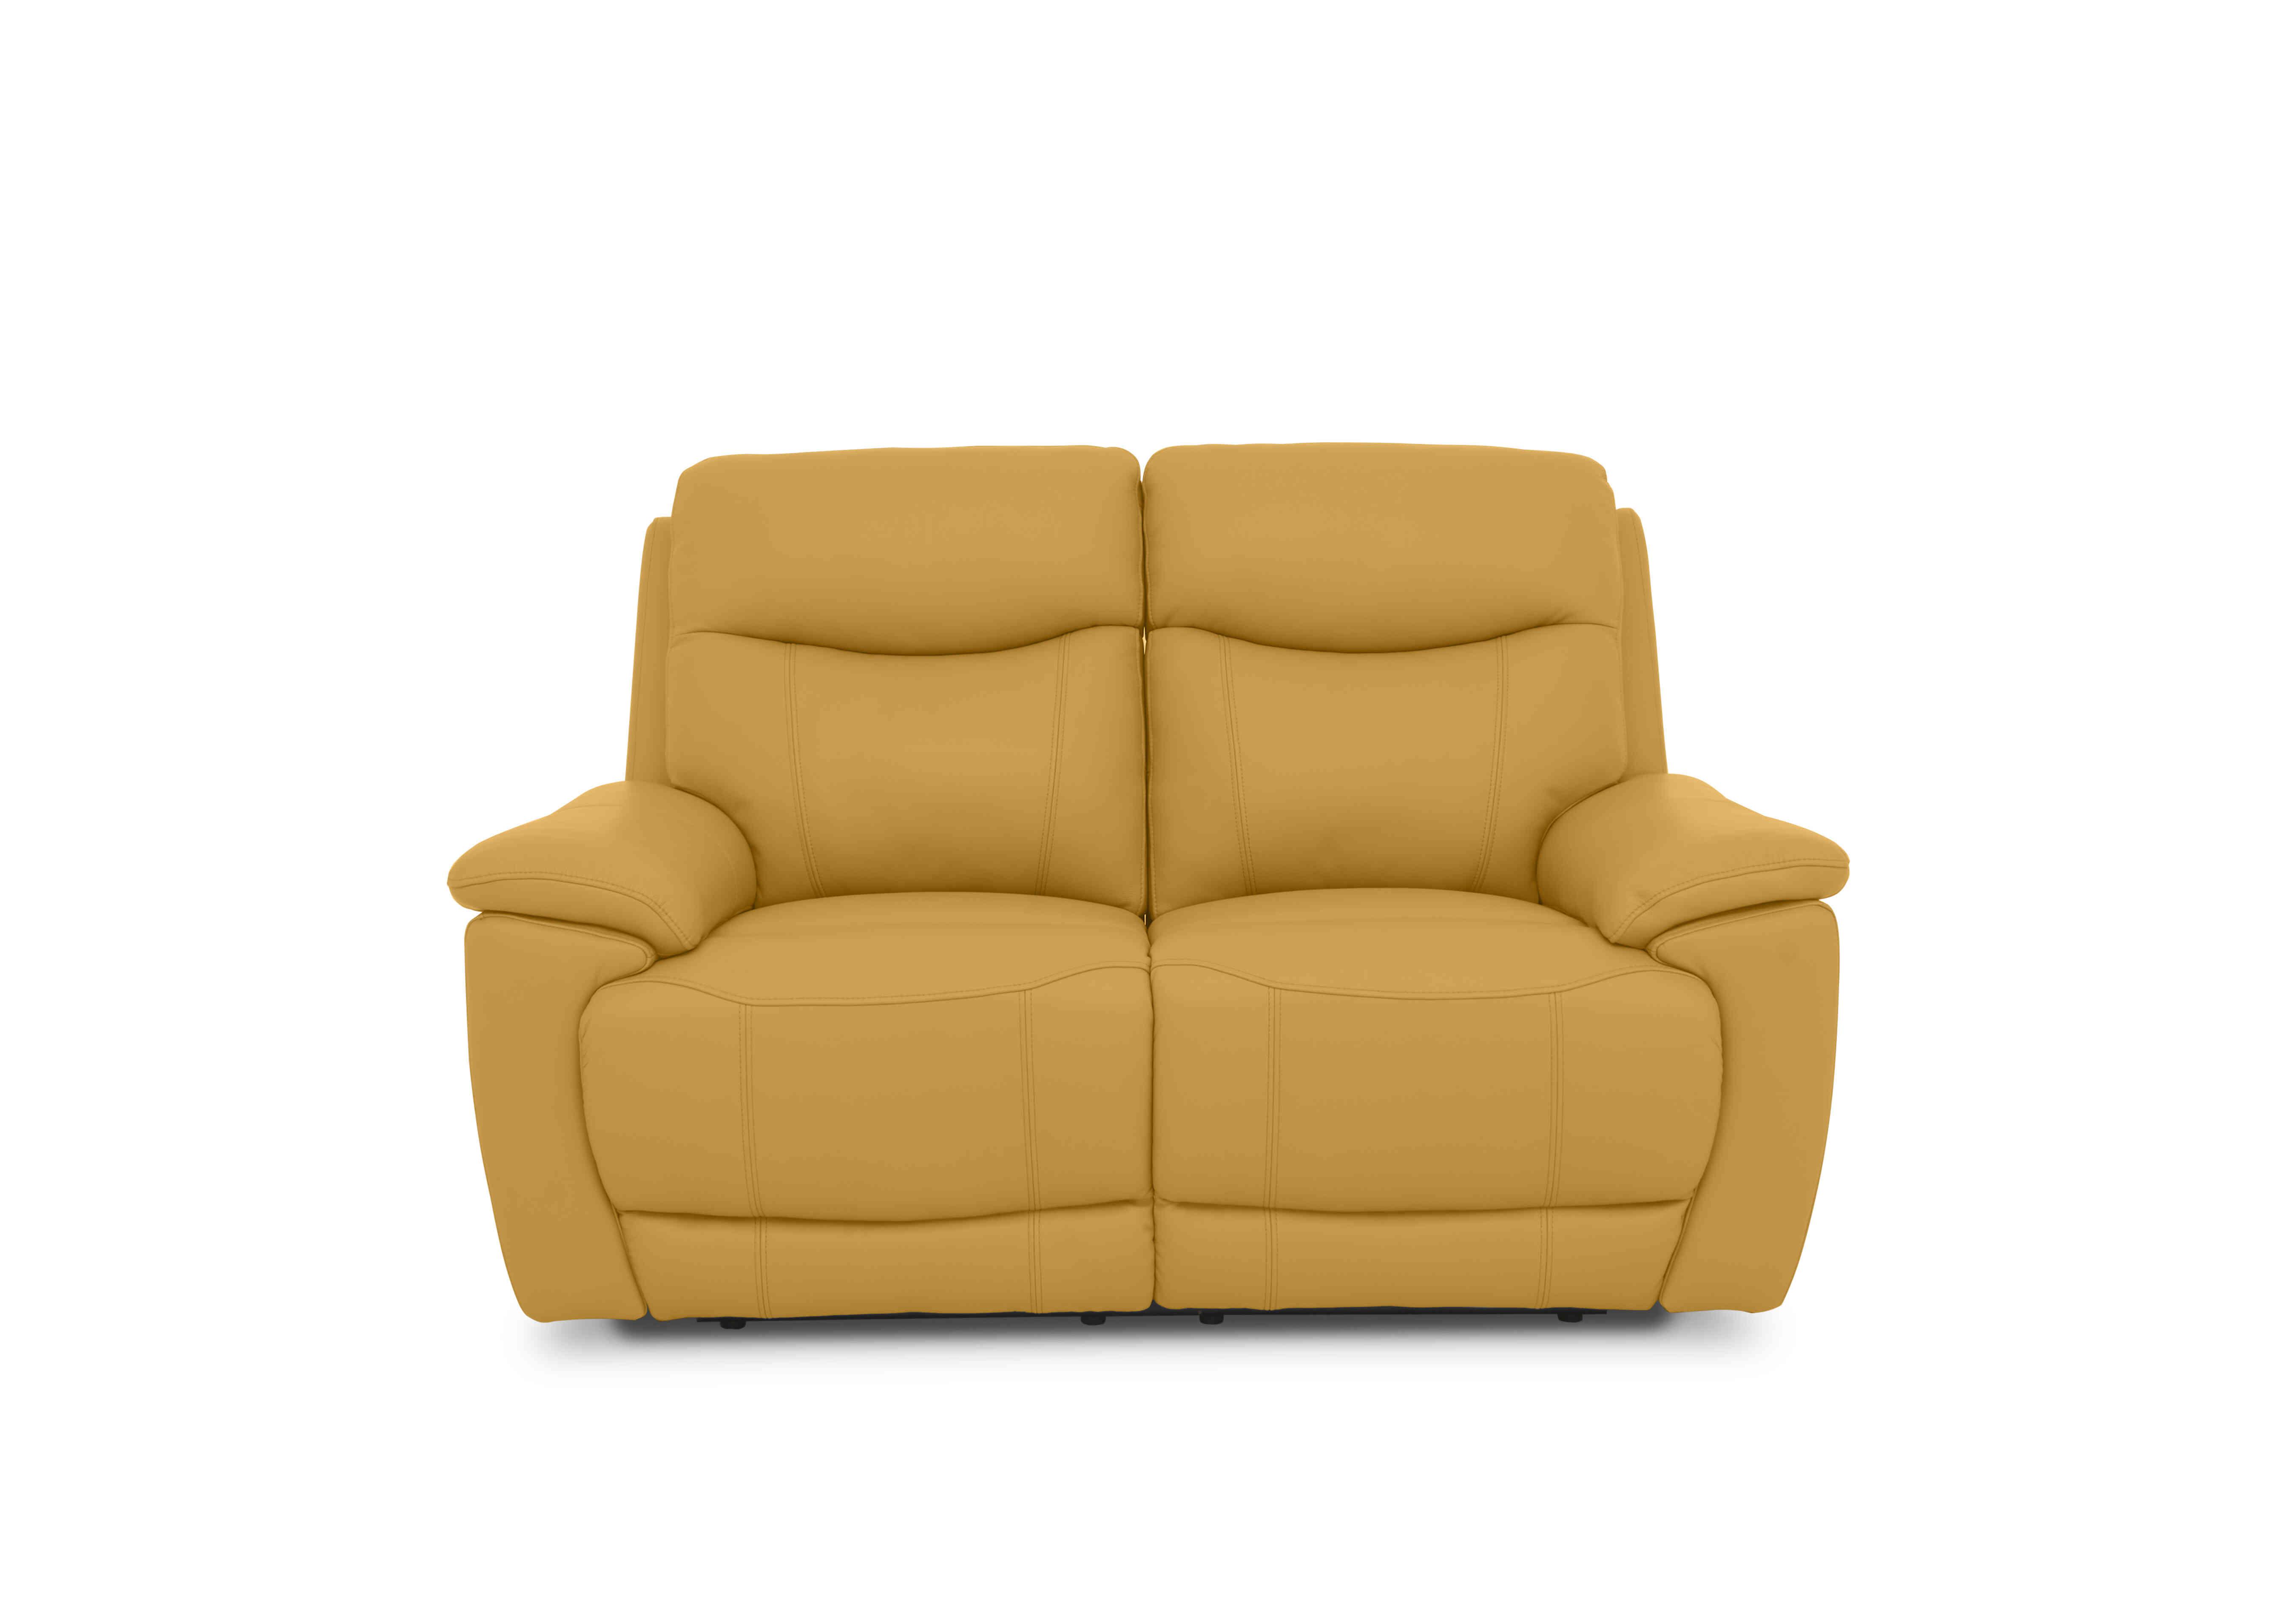 Sloane 2 Seater Leather Sofa in Cat-35/14 Florida Sunburst on Furniture Village